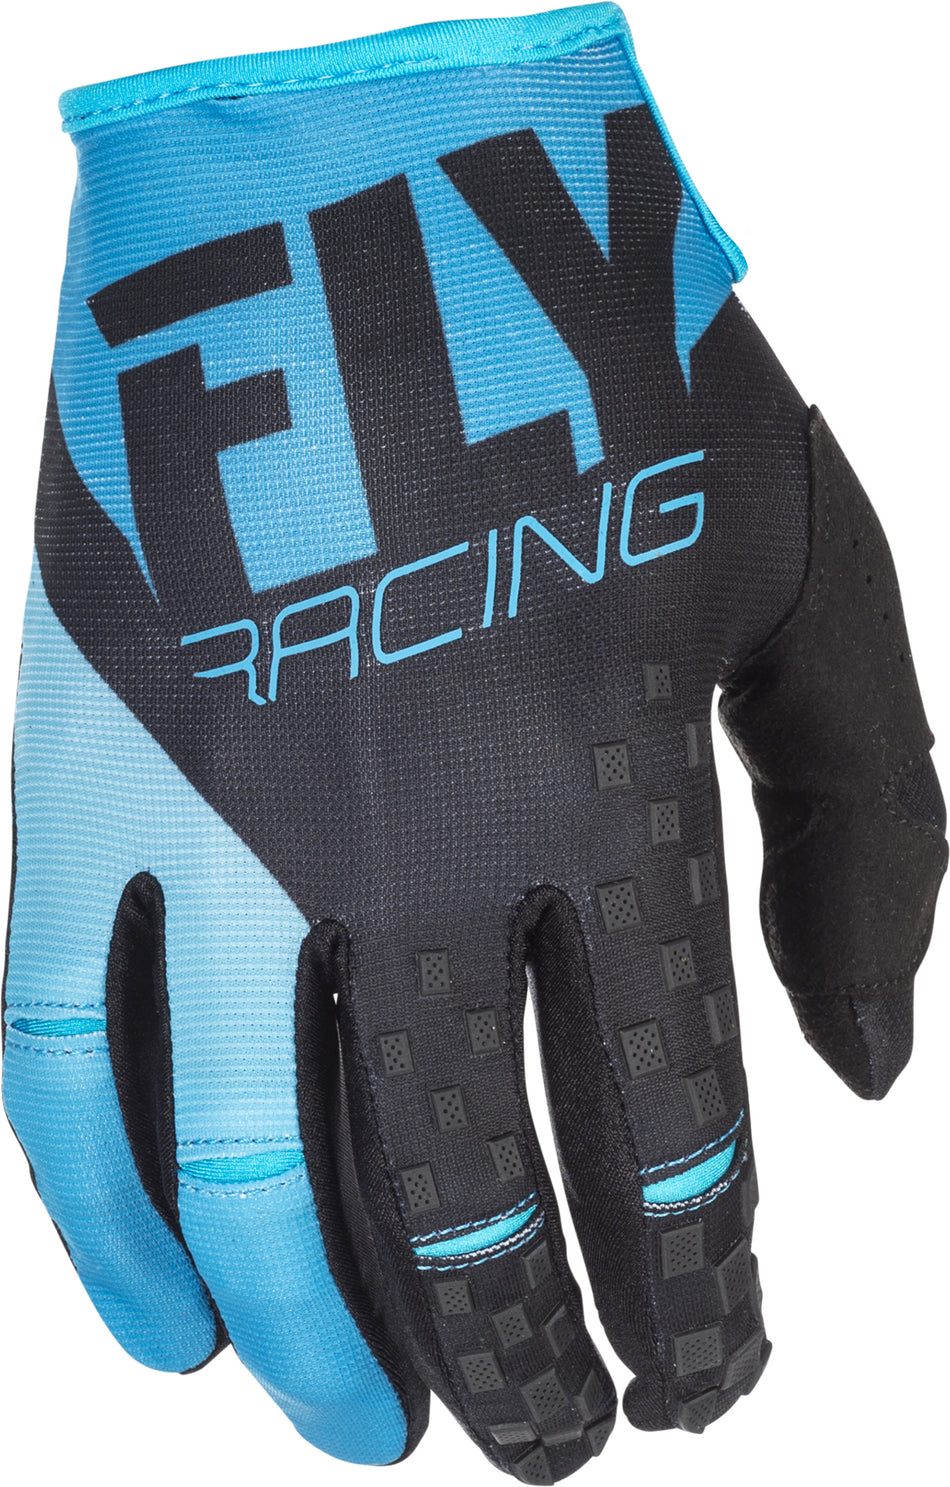 FLY RACING Kinetic Gloves Blue/Black Sz 9 371-41109